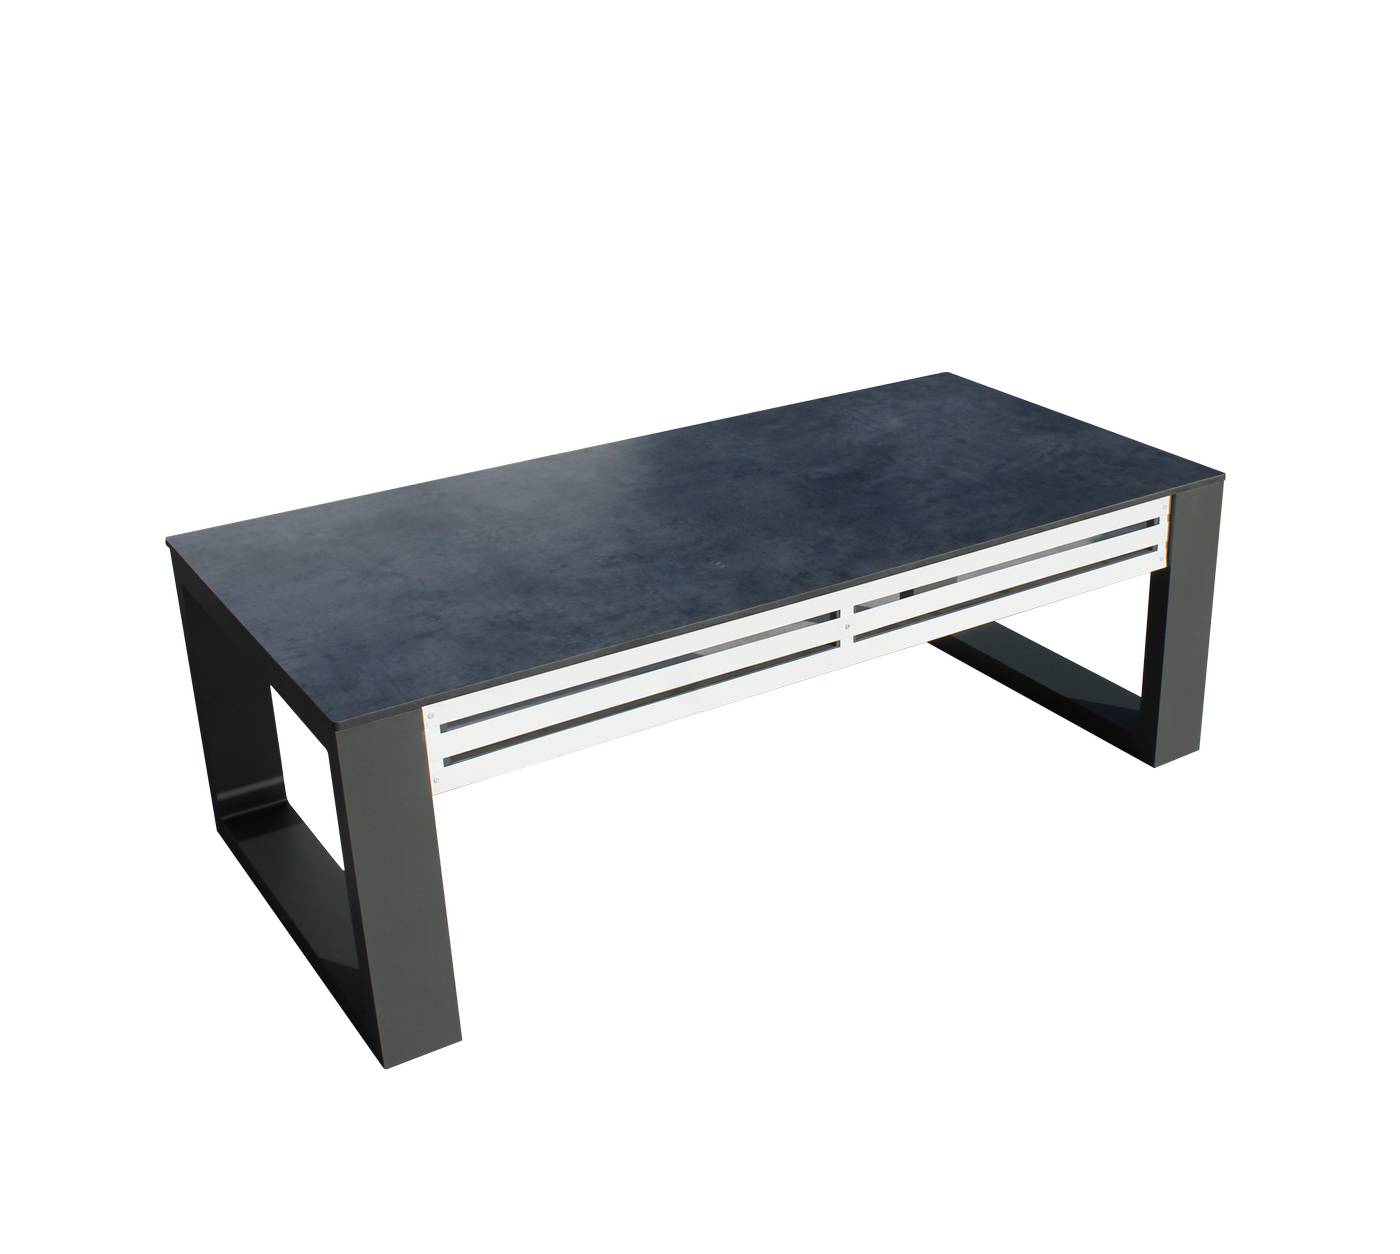 Set Aluminio Luxe Gala-8 - Exclusivo conjunto de alumnio bicolor: 1 sofá de 3 plazas + 2 sillones + 1 mesa de centro.